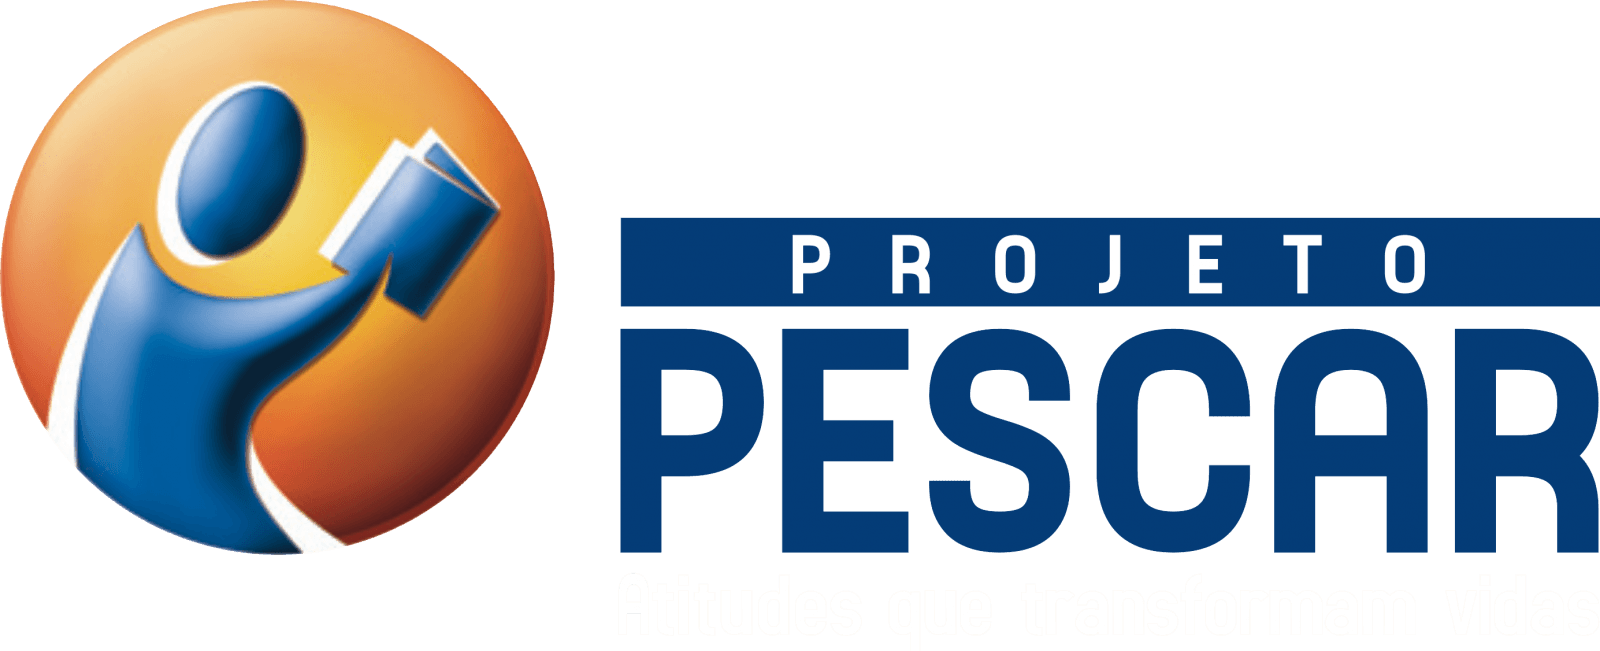 Projeto Pescar.png